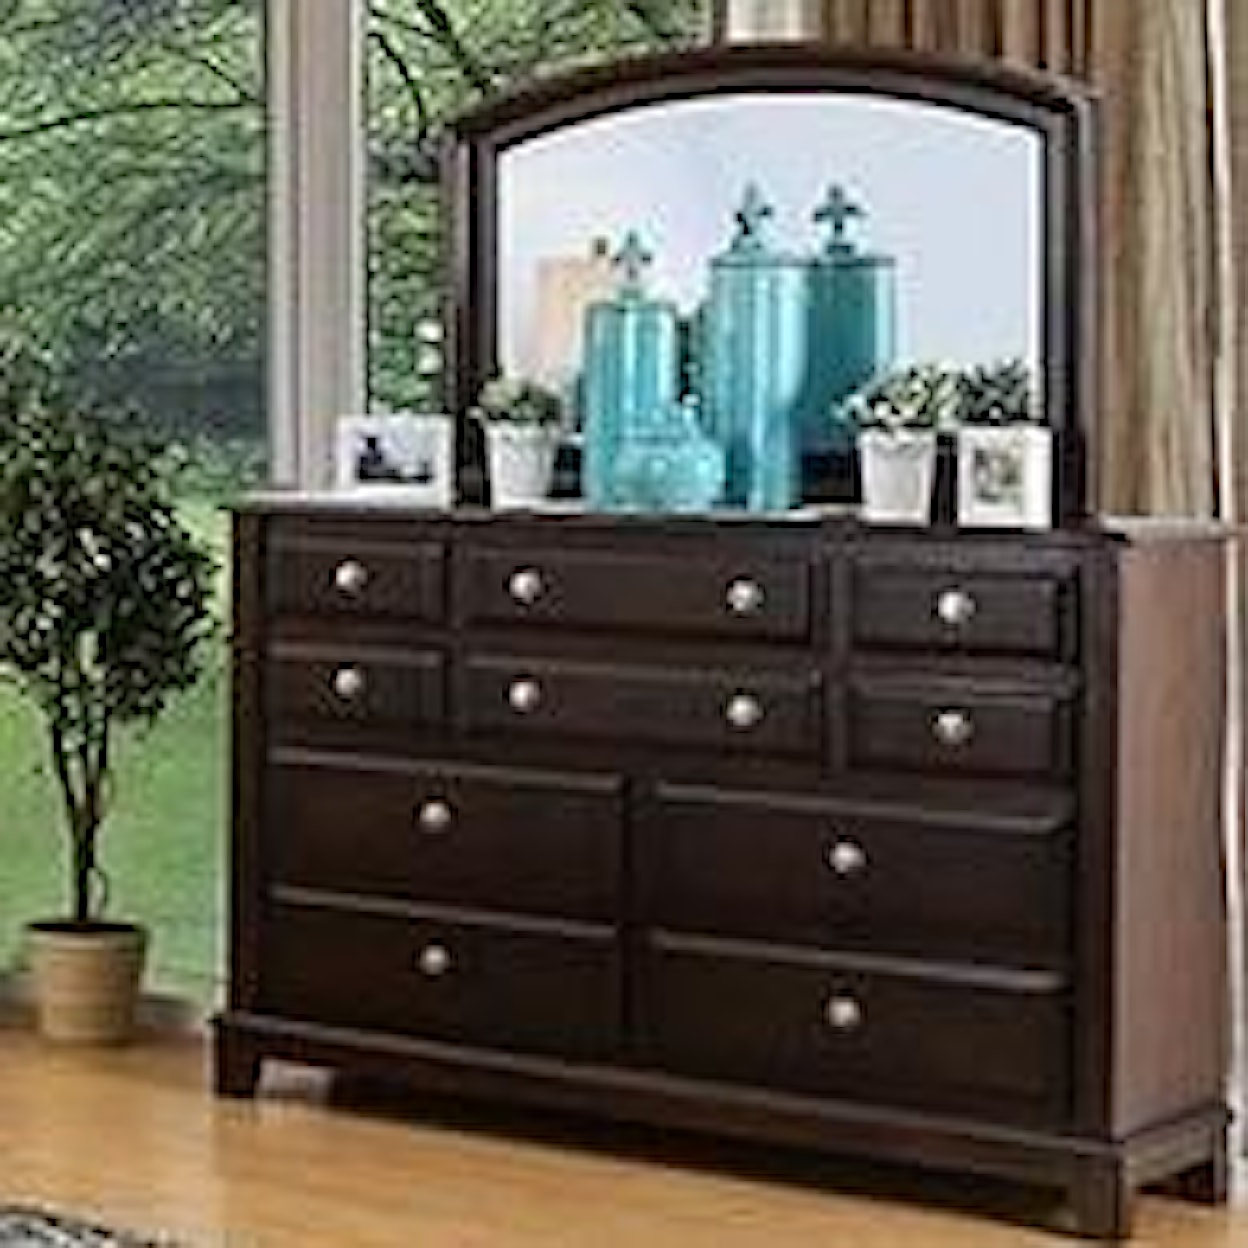 Furniture of America Litchville Dresser and Mirror Combination